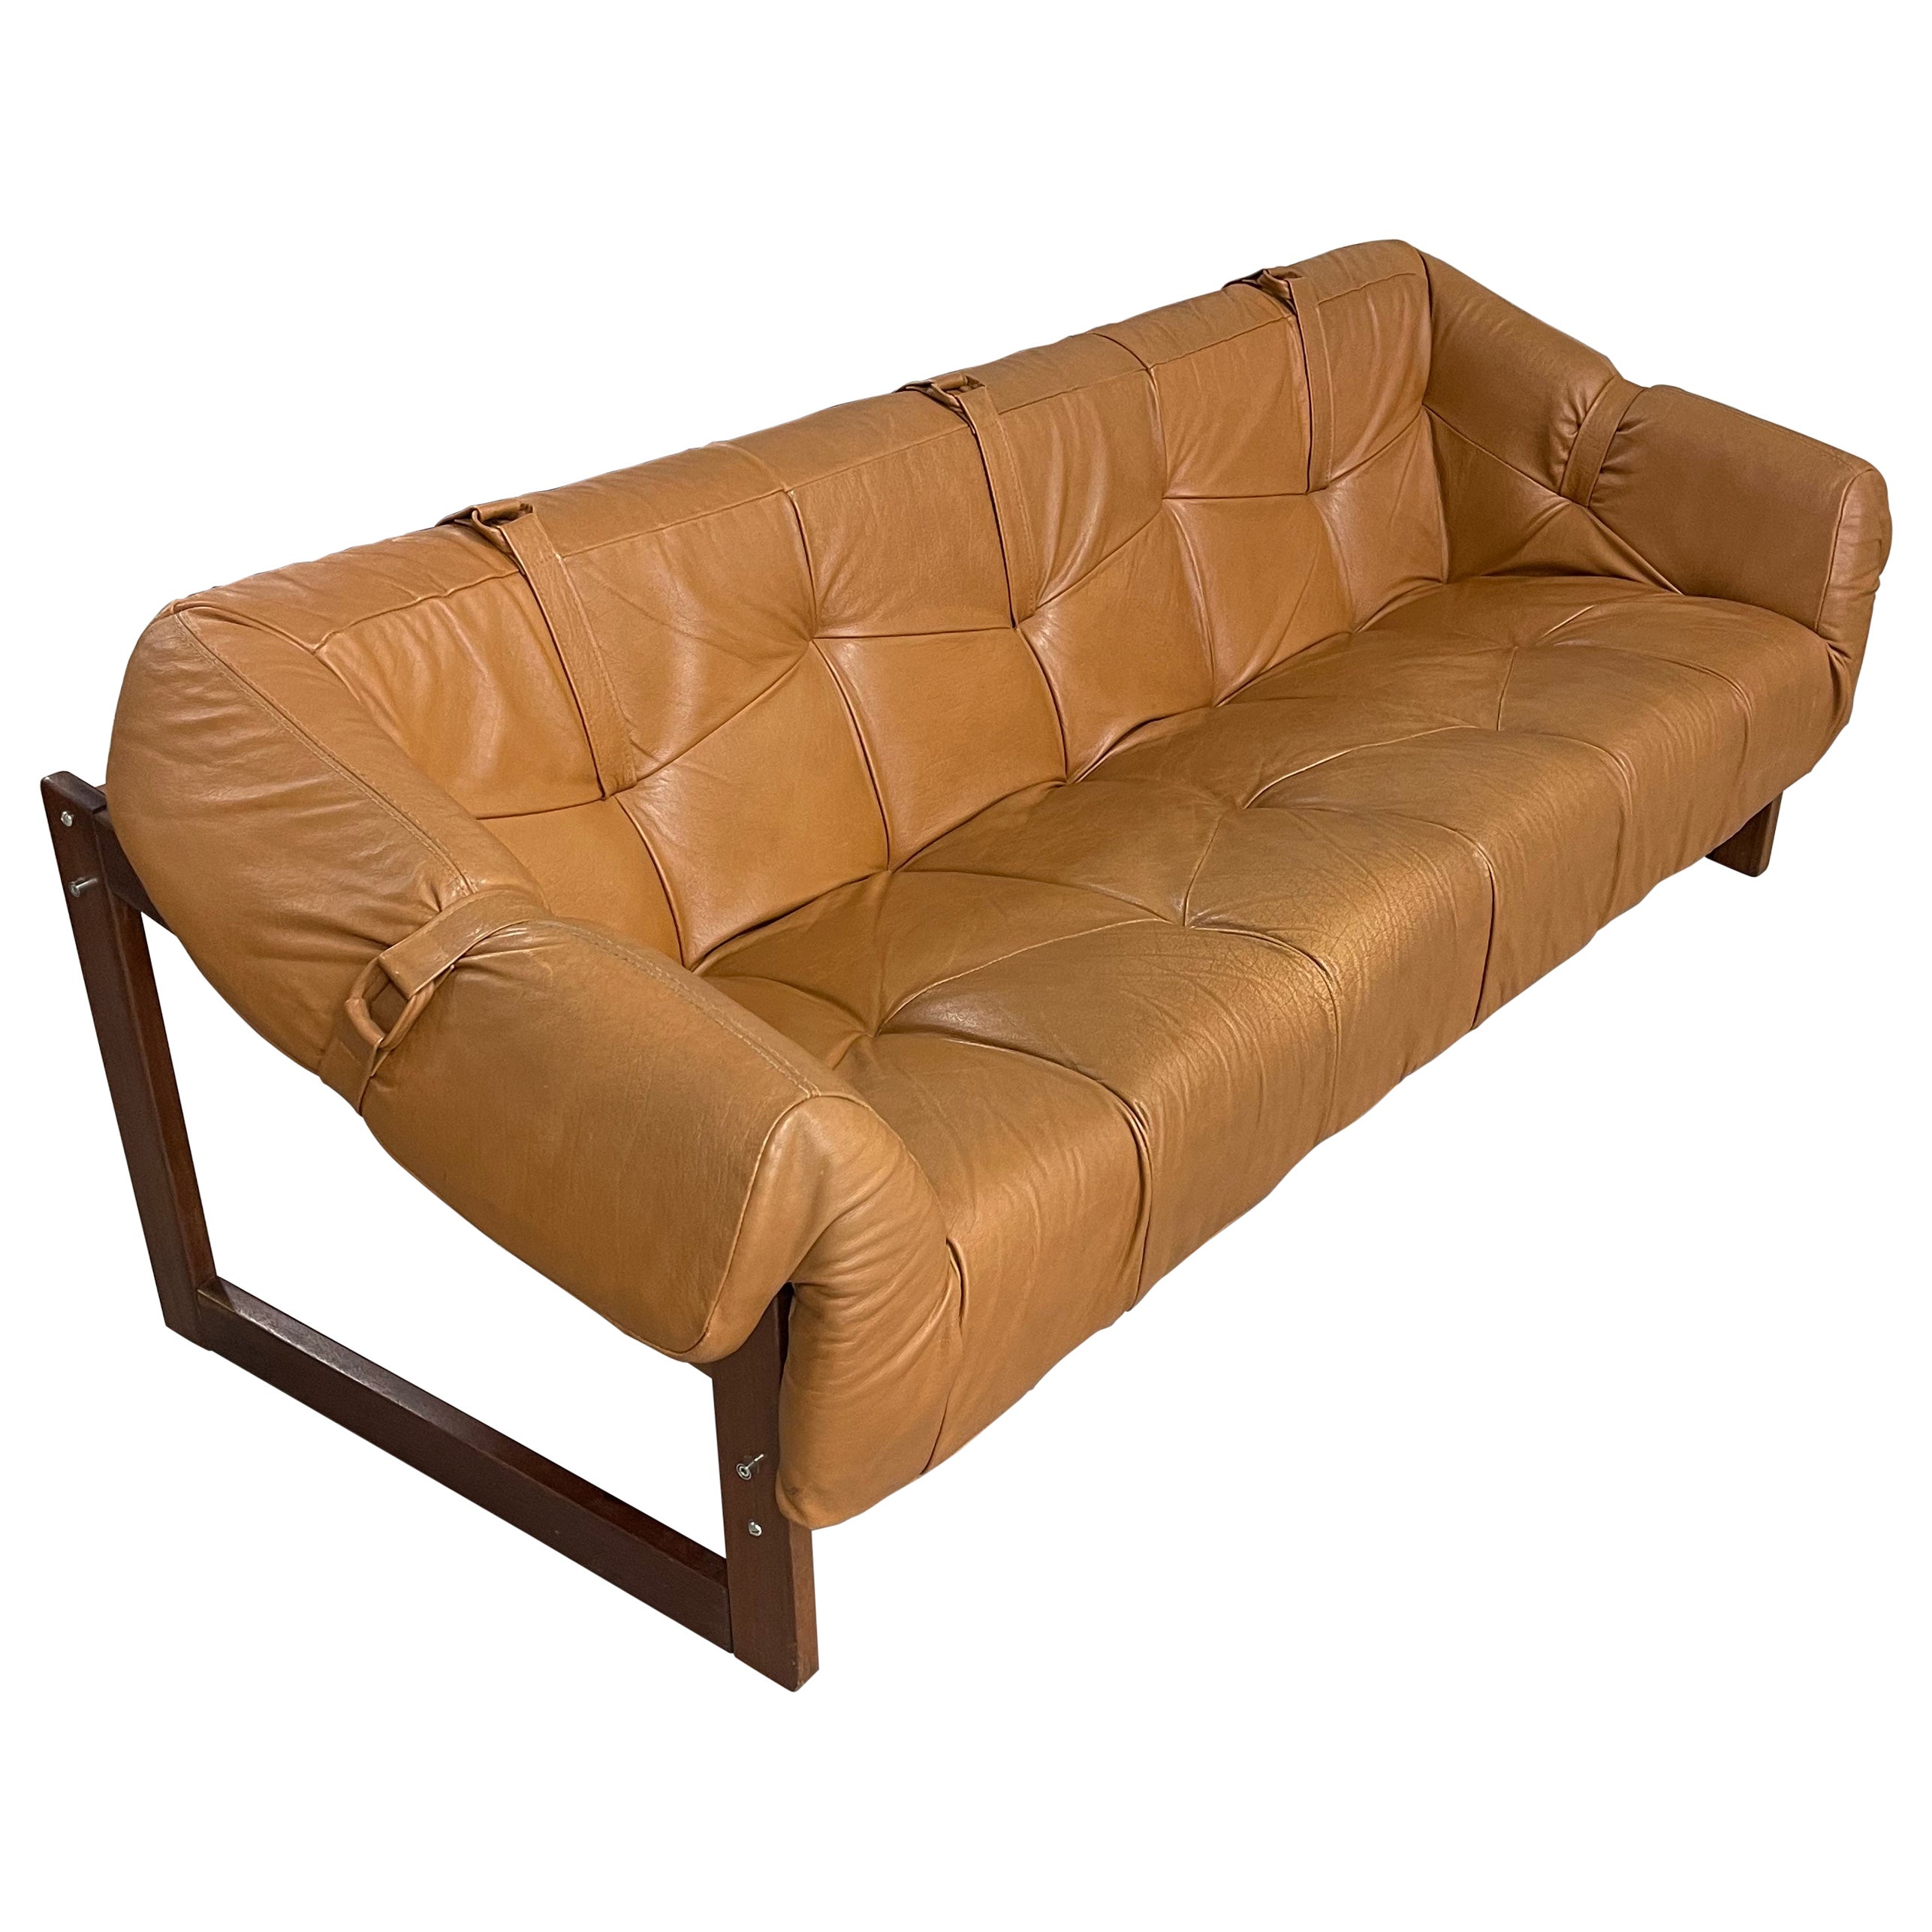 Percival Lafer Brazilian Rosewood Leather Sofa